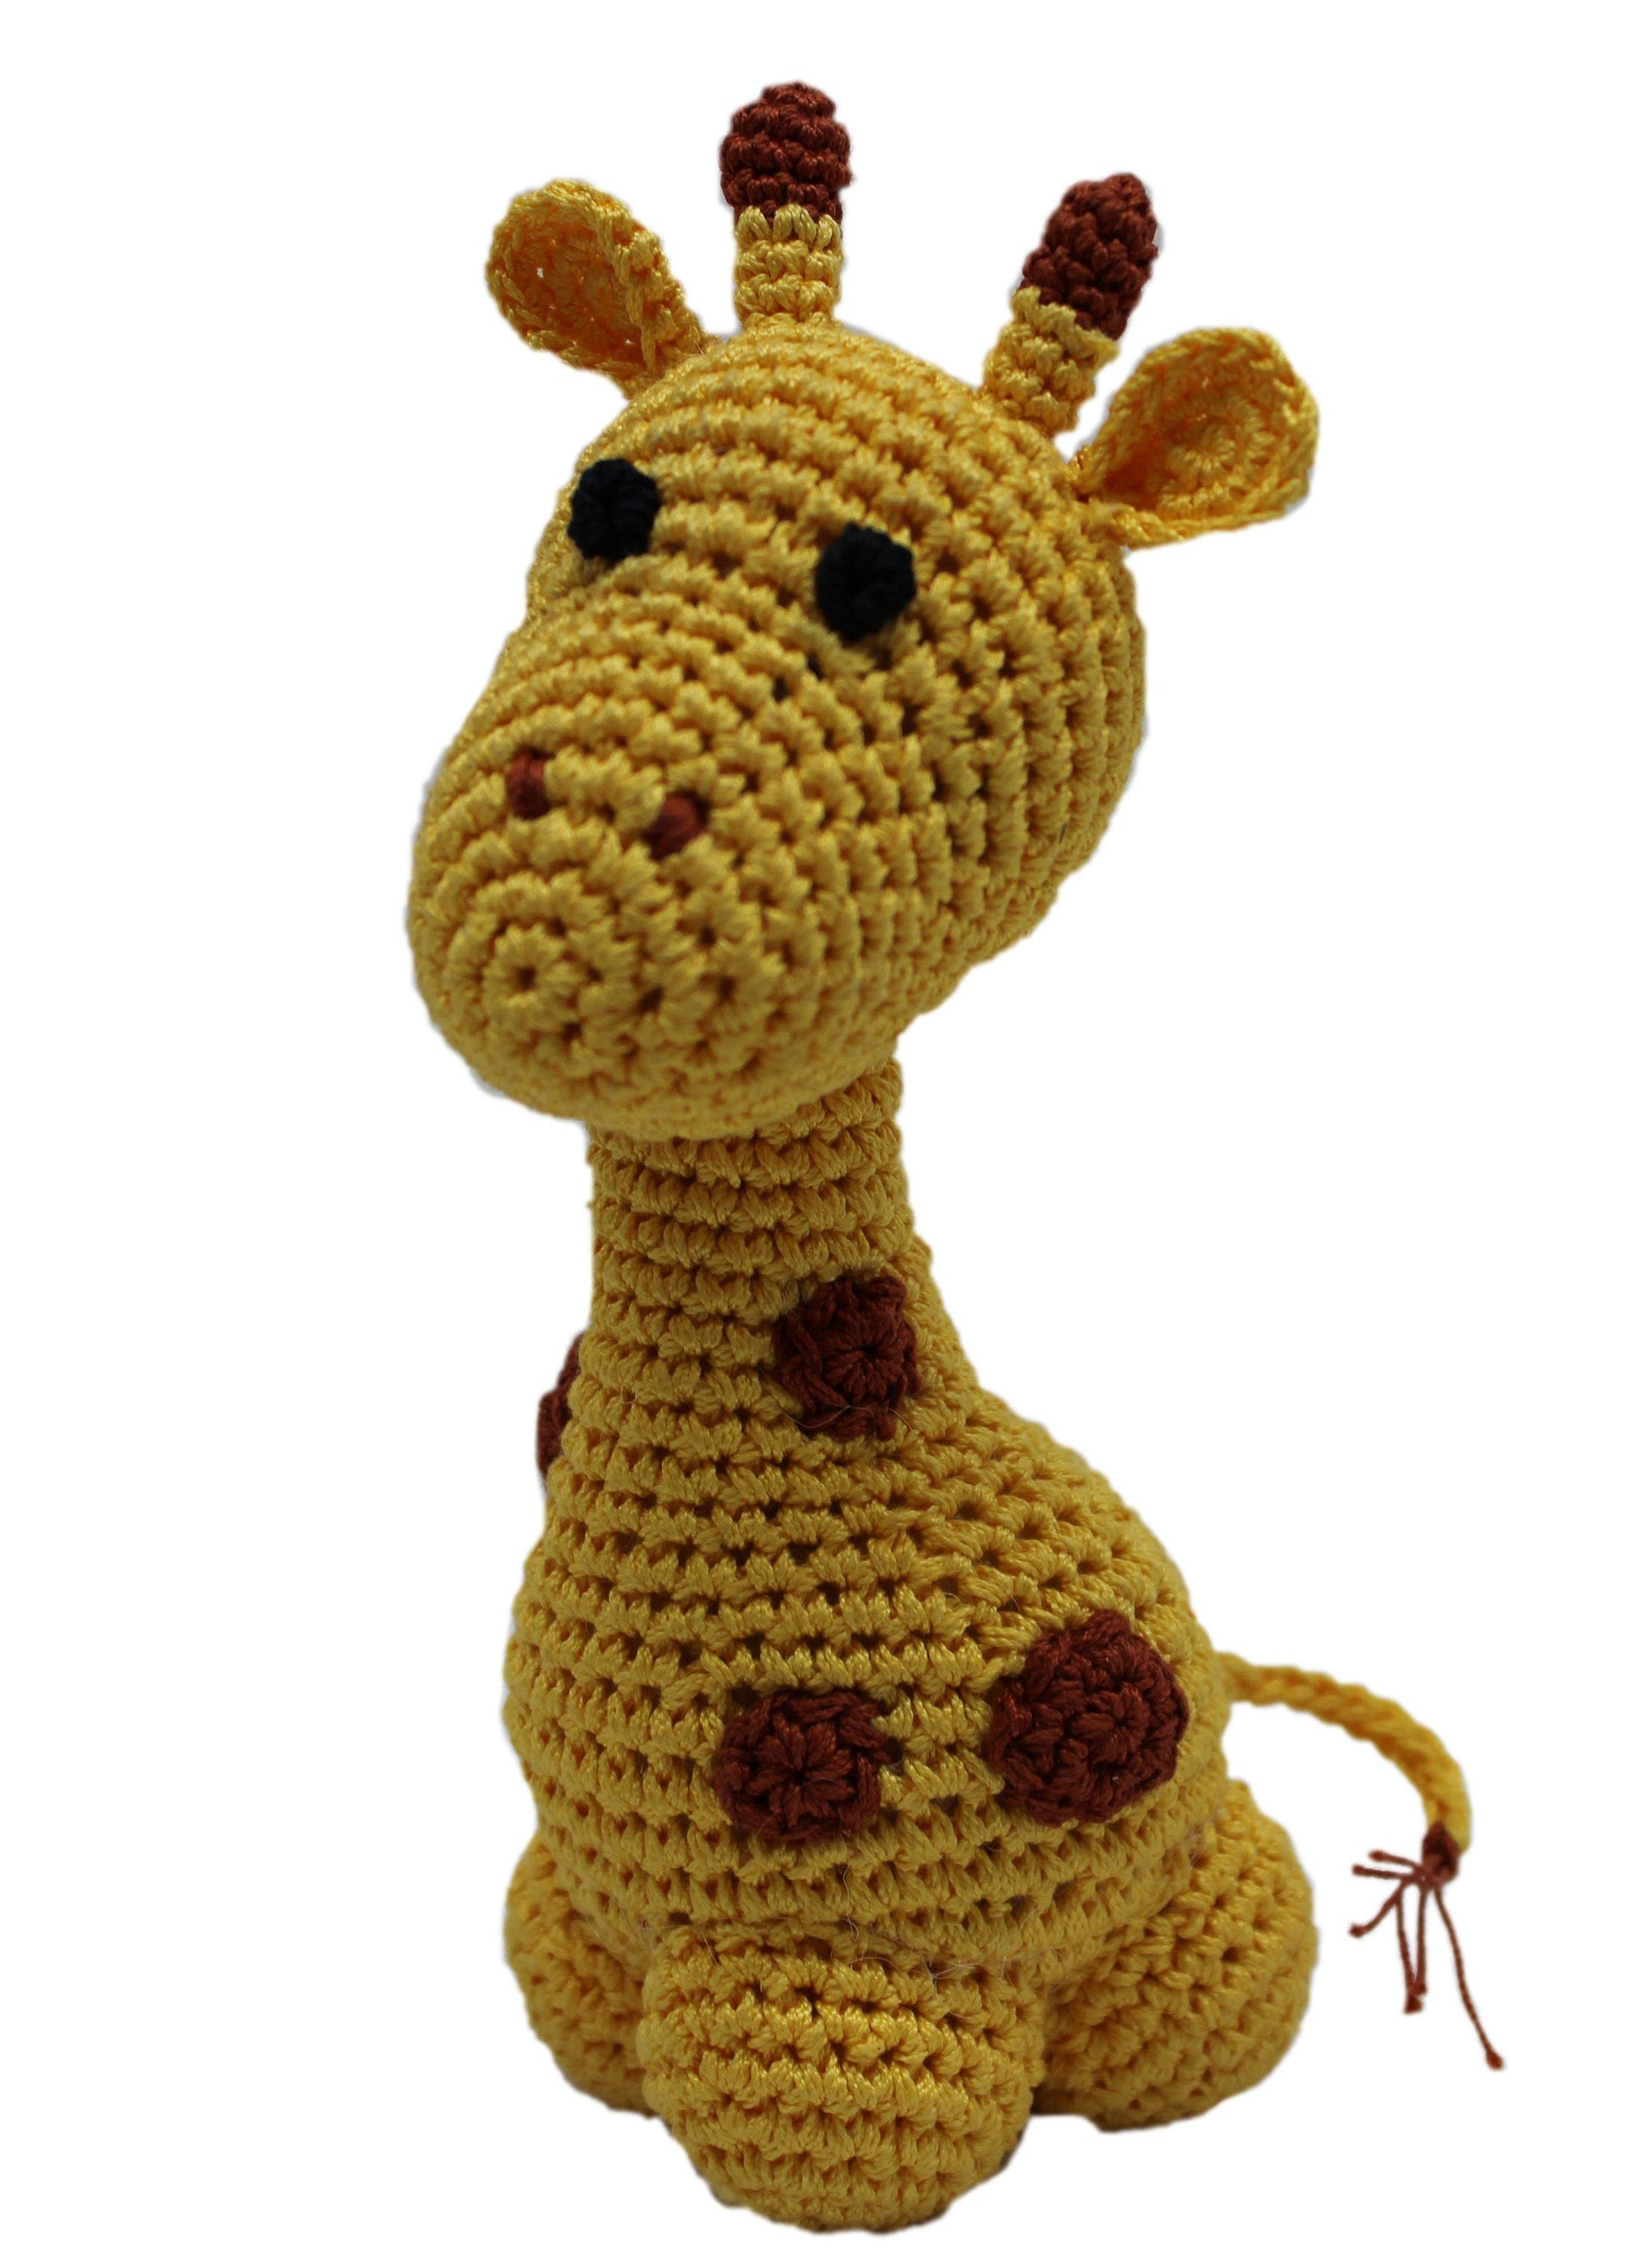 Knit Knacks Organic Cotton Pet, Dog Toys, "Animals" (Choose from: Sloth, Zebra, Giraffe, Hyena, Elephant, Lion, or Sea Turtle)-3